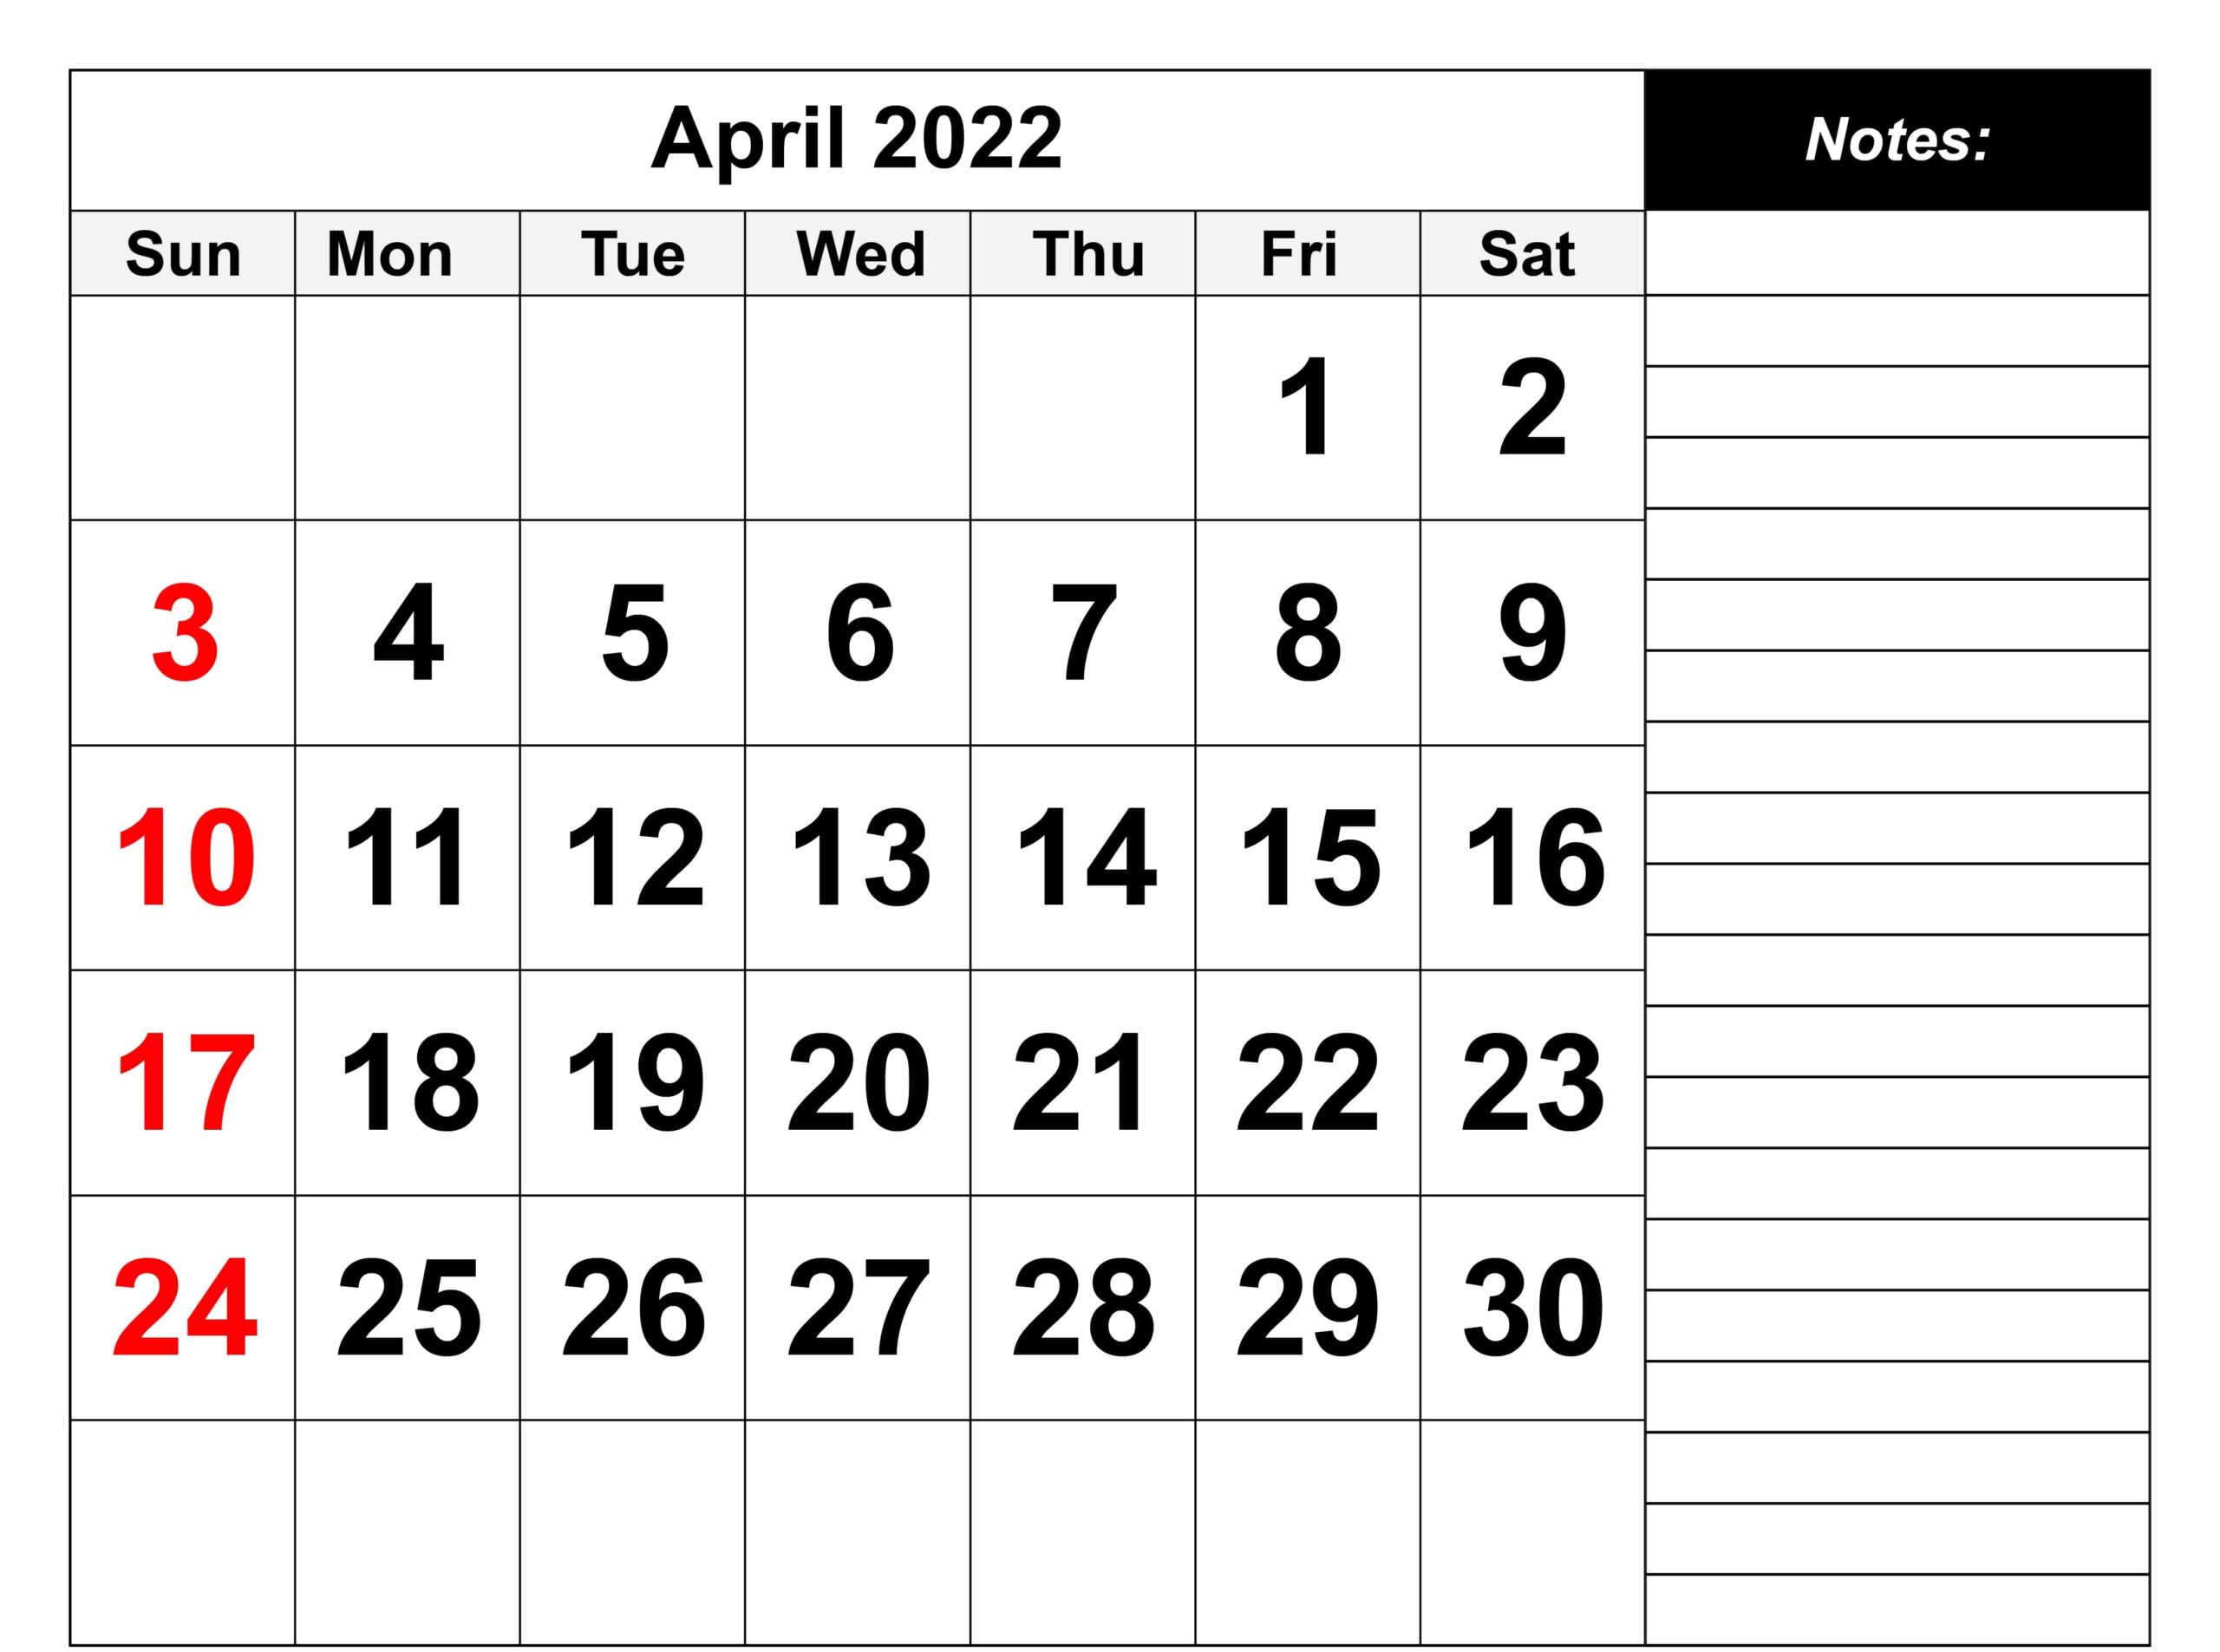 April 2022 Printable Calendar with Notes